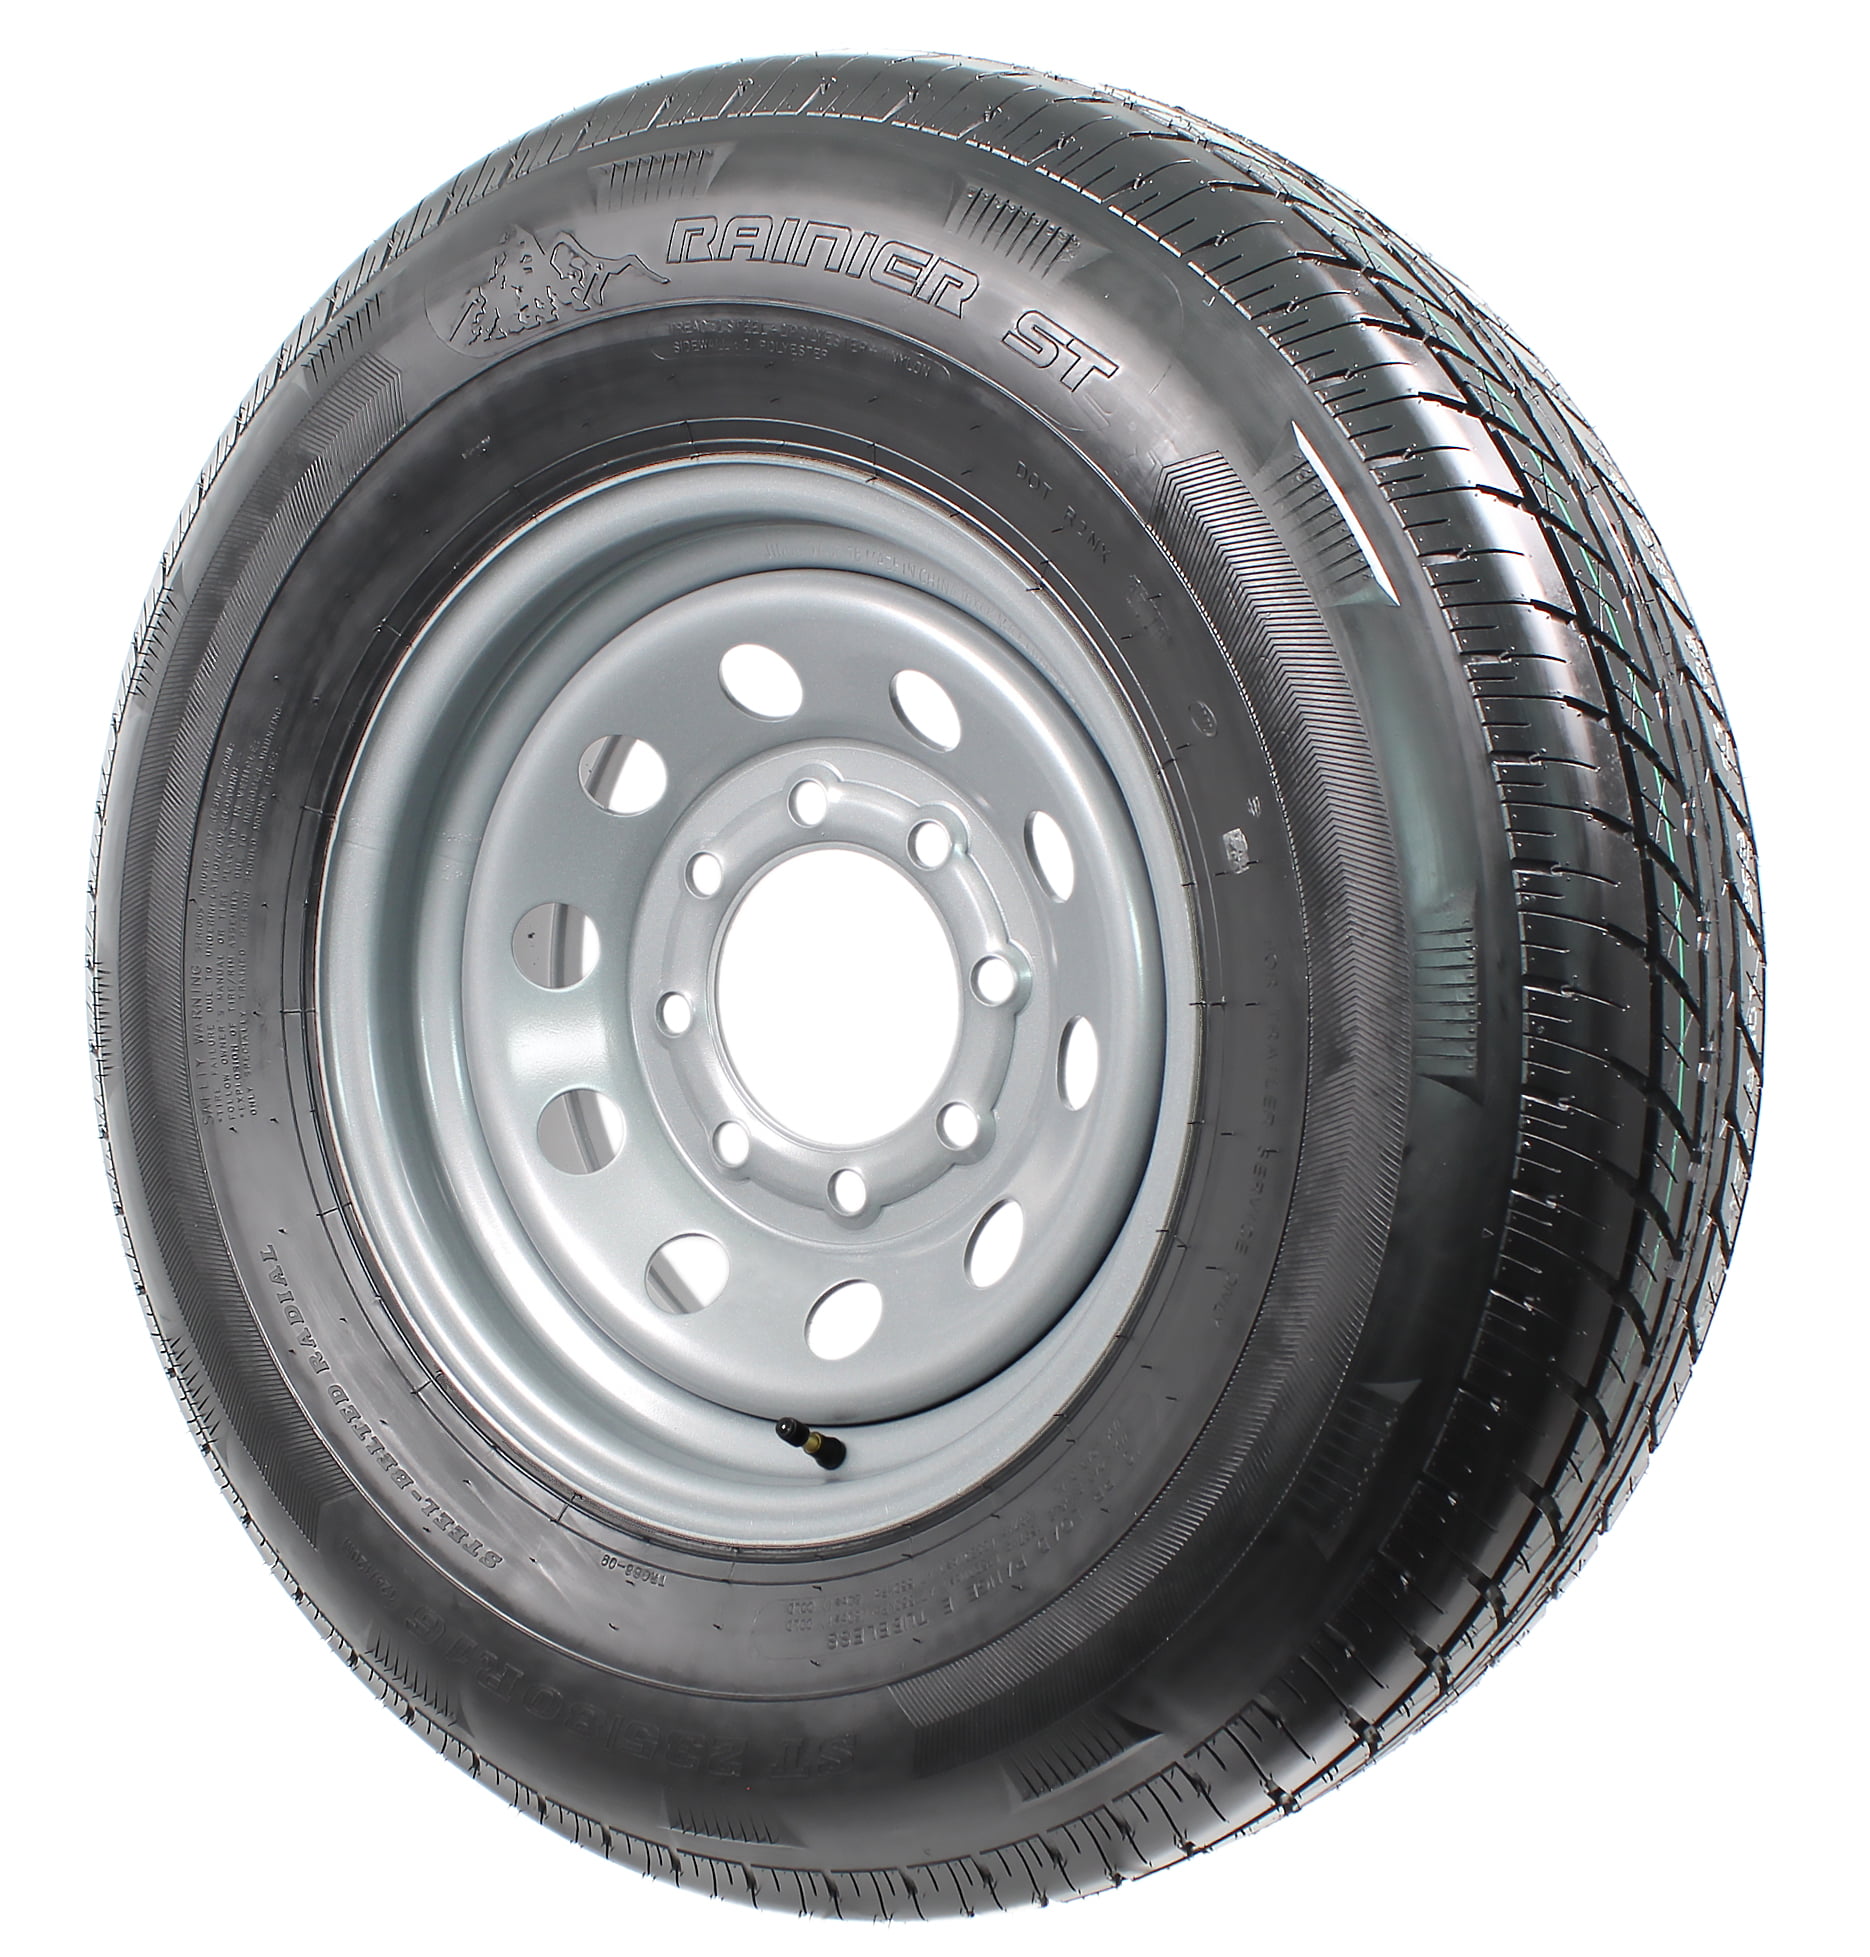 8x6.5 16 Silver Mod Trailer Wheel 8 Lug with Radial ST235/80R16 12 PR Tire Mounted bolt circle 